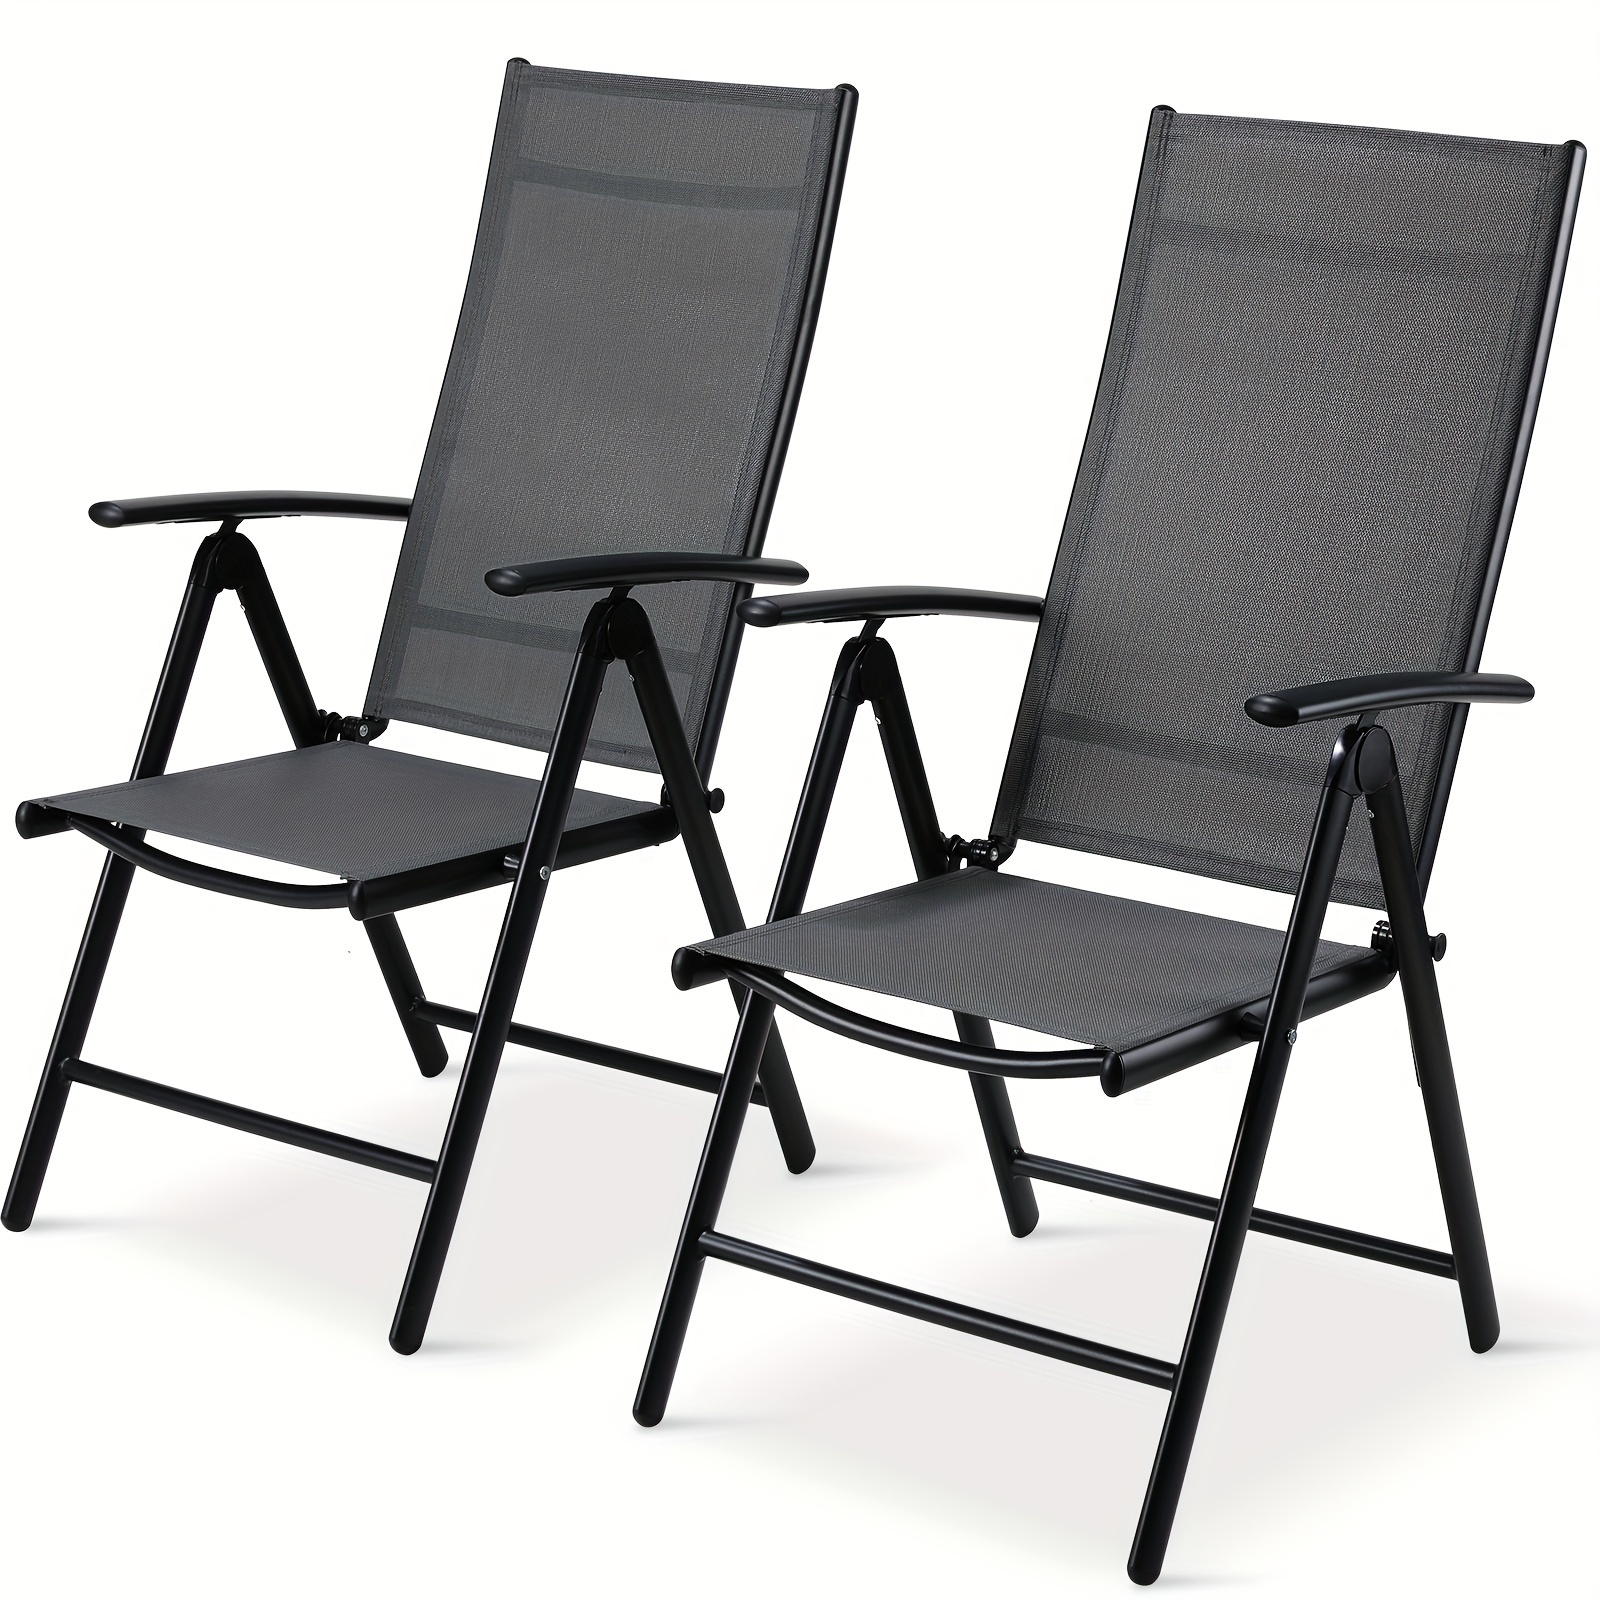 

High Back Foldable Garden Chair, Aluminum Balcony Chair Set Of 2, Garden Chair Height Adjustable 7 Ways, Outdoor Garden Chair, Weatherproof, Folding Camping Chair, Up To 120 Kg, Dark Grey